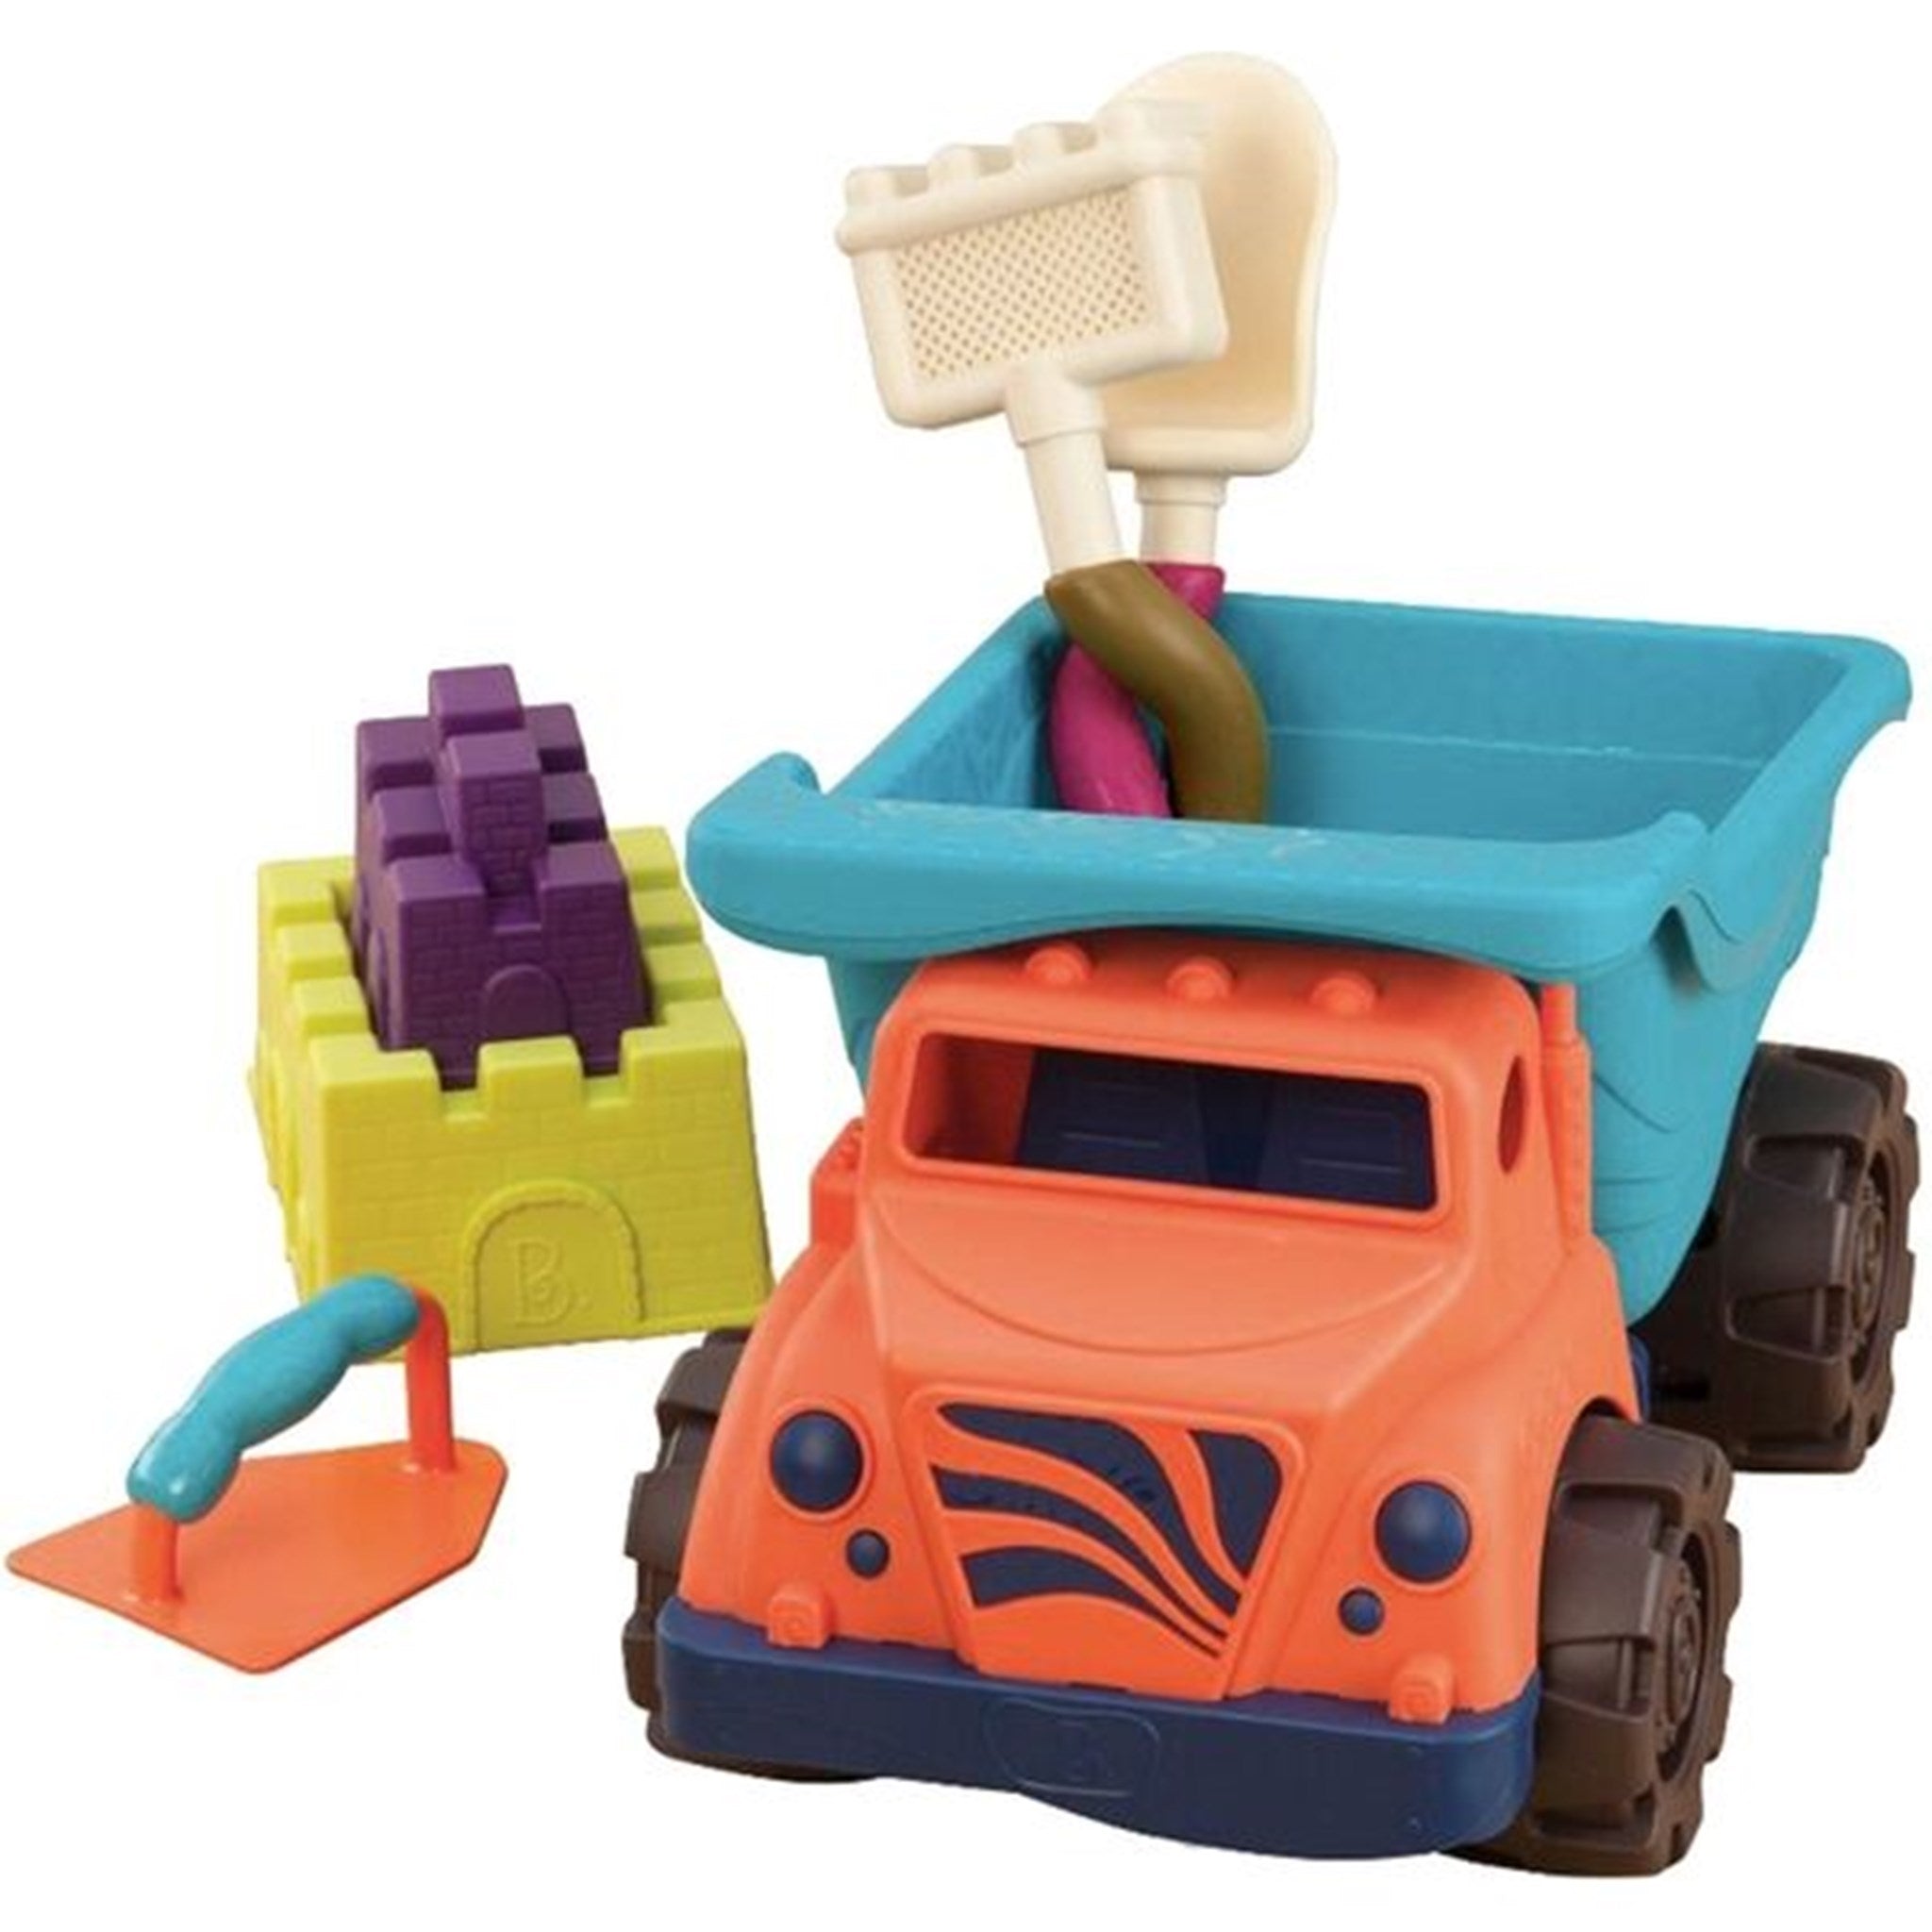 B-toys Sand Truck